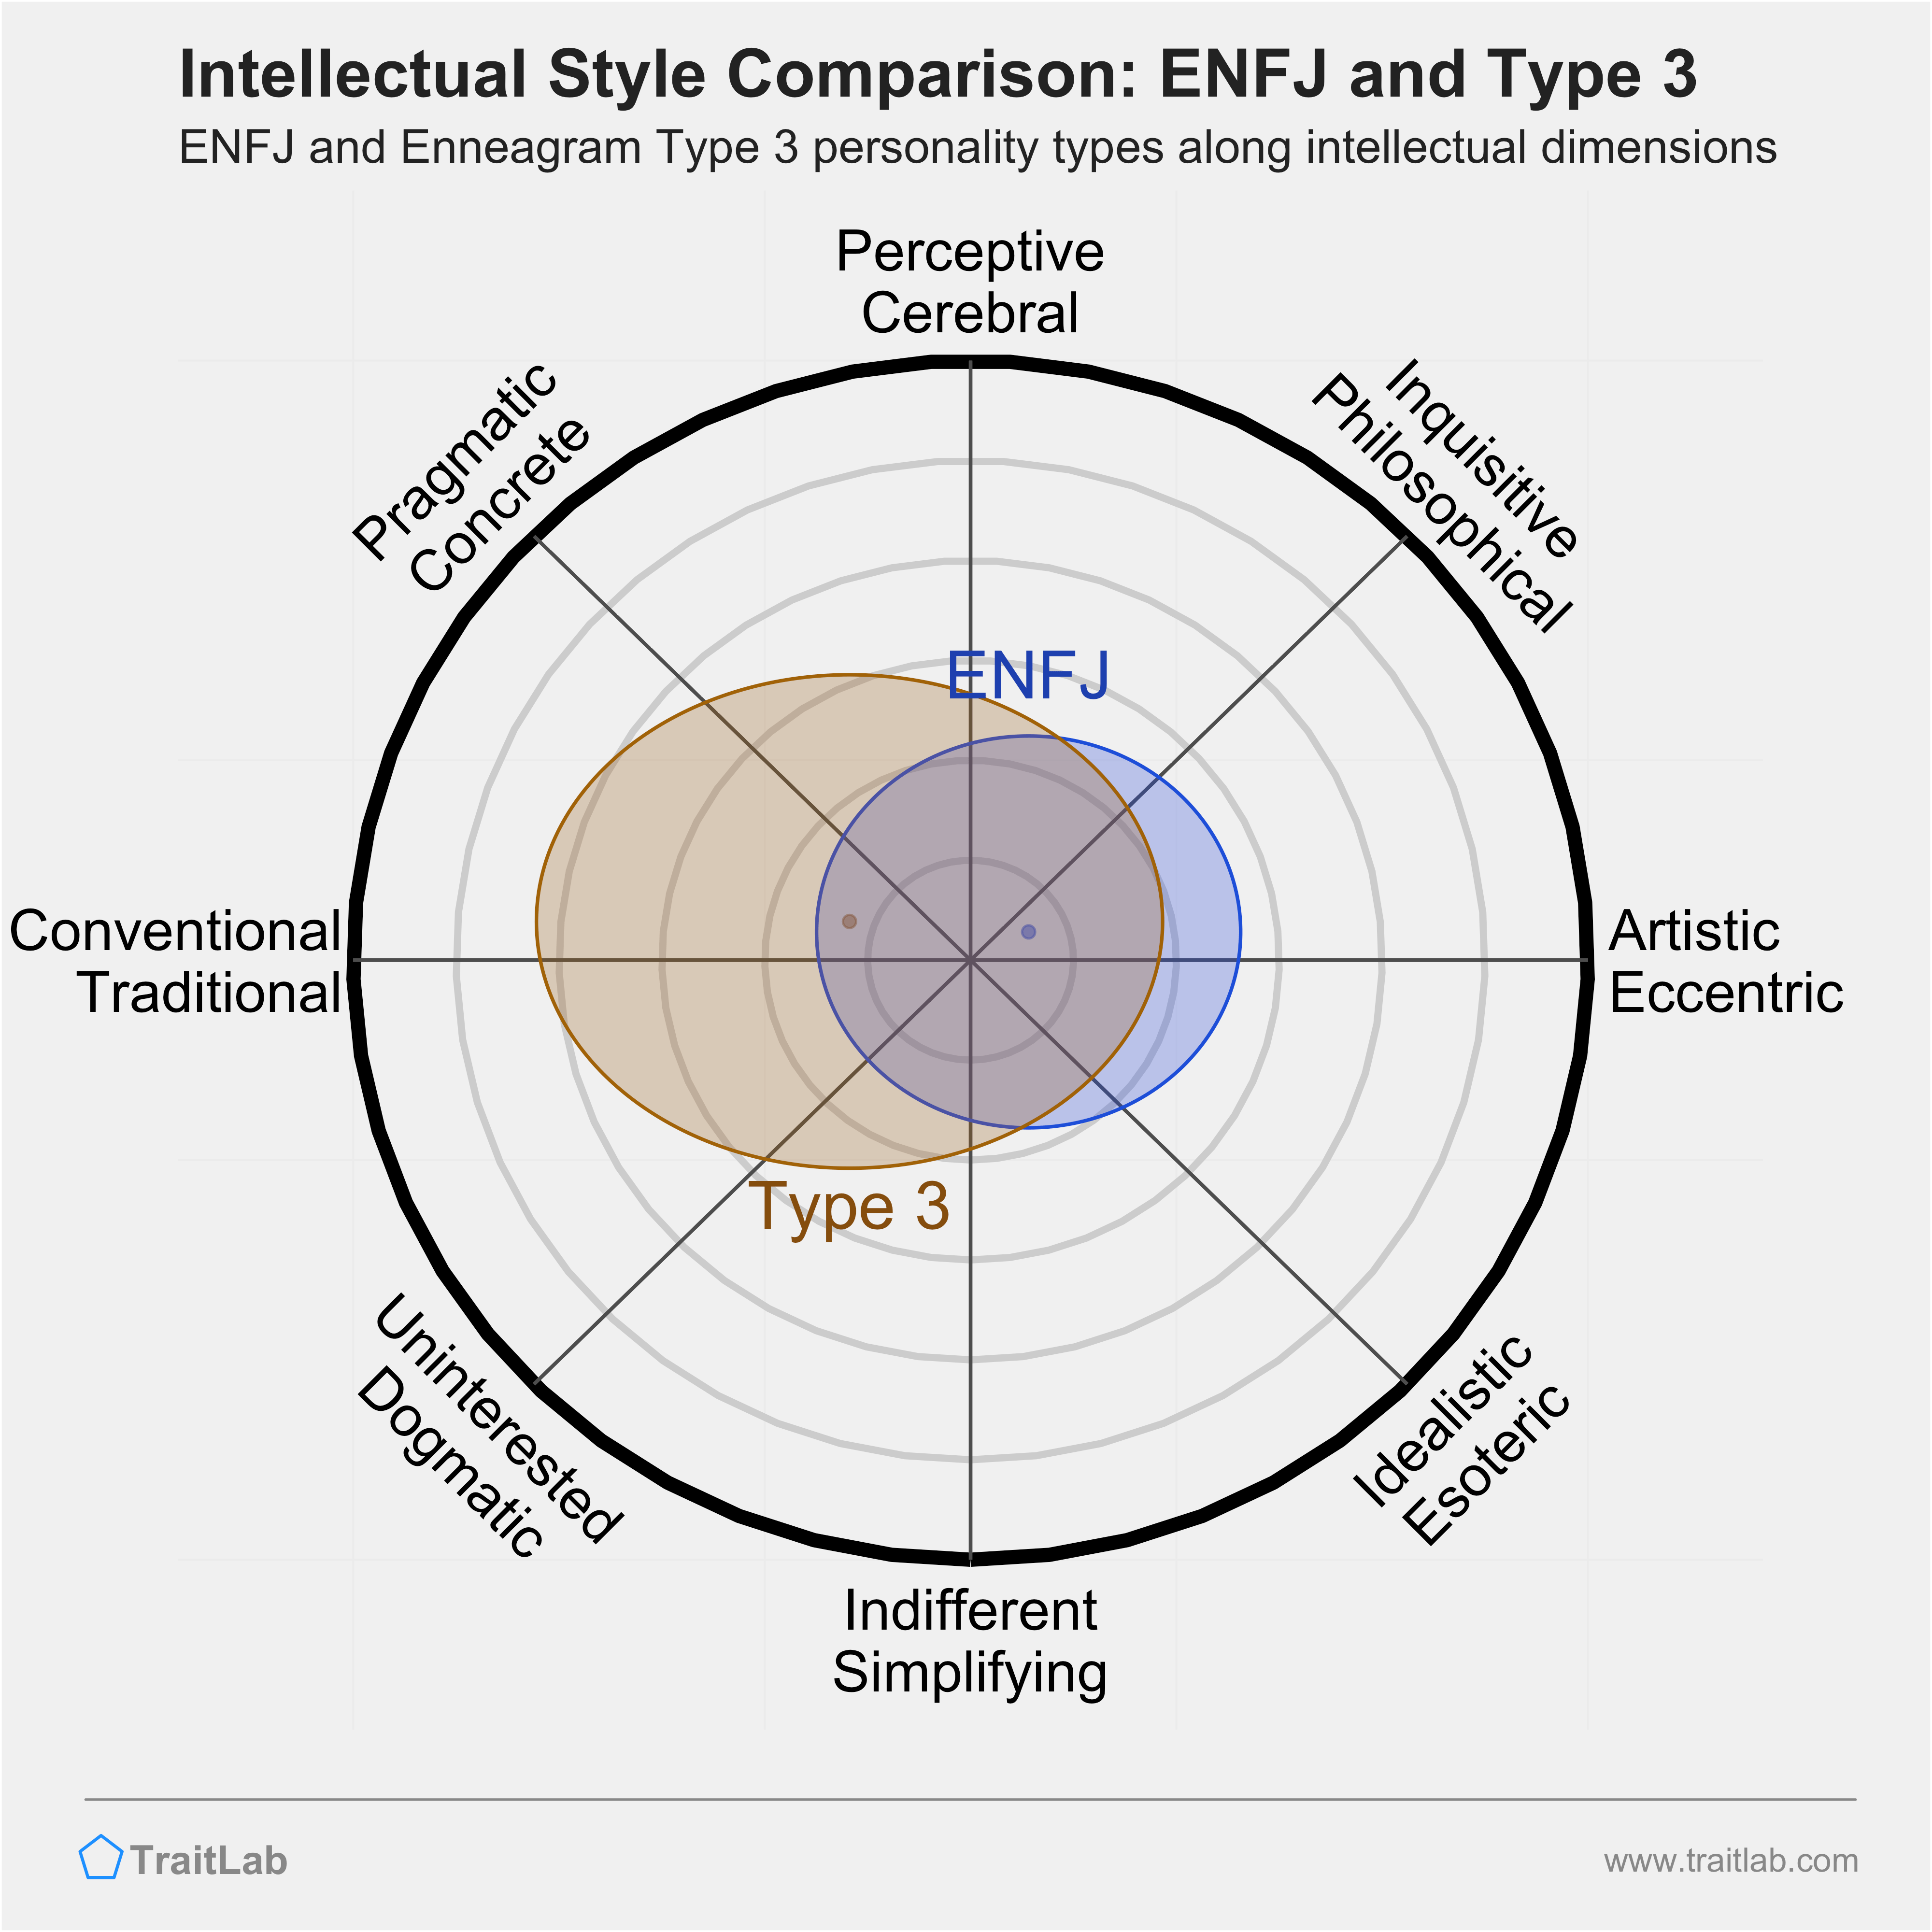 ENFJ and Type 3 comparison across intellectual dimensions